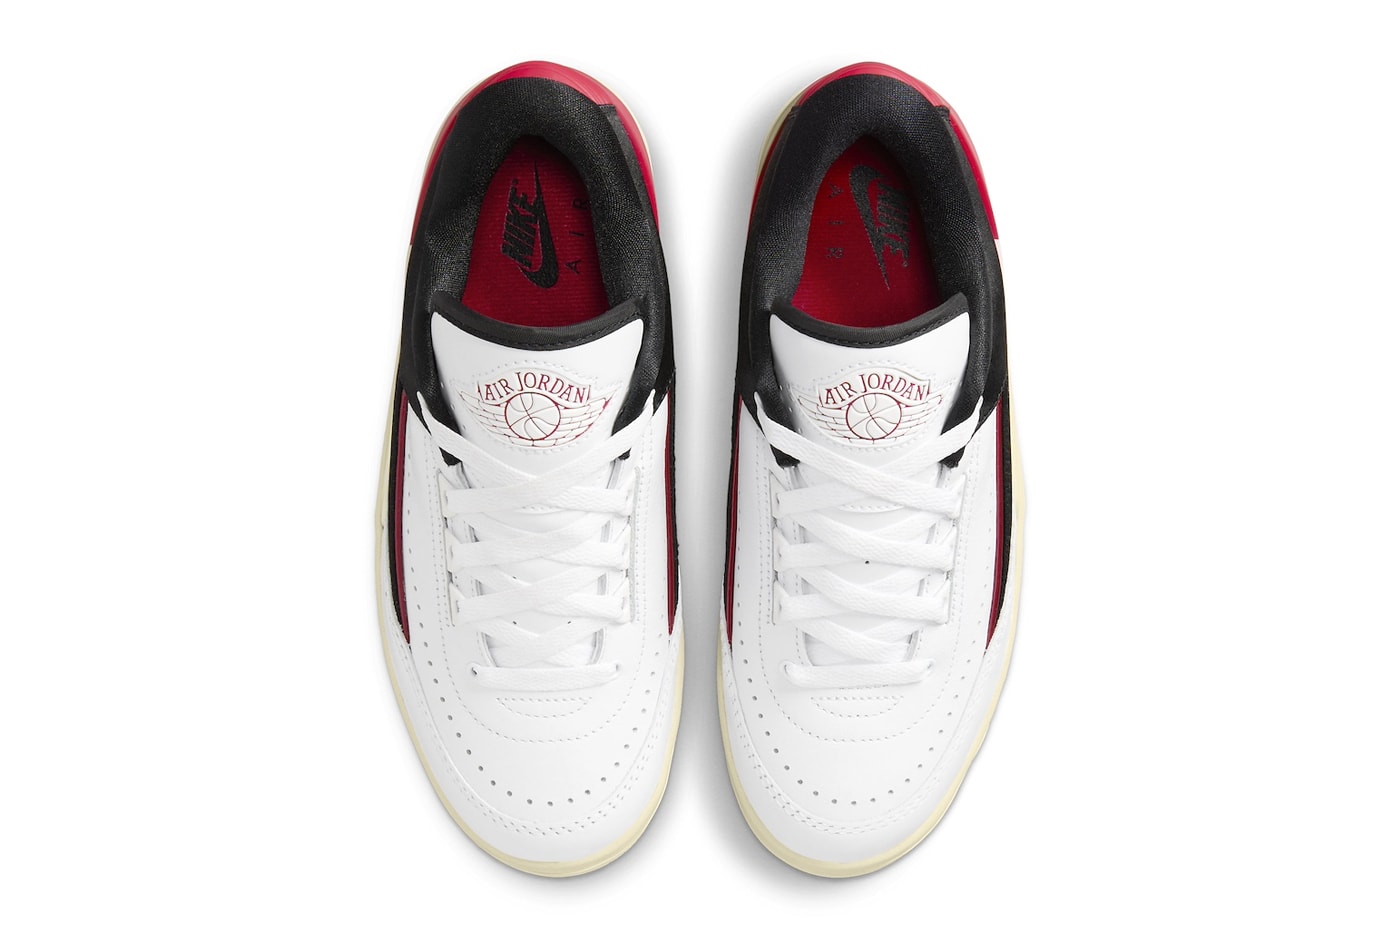 Air Jordan 2 Low "Chicago Twist" Receives a Fall Release Date FD4849-106 White/University Red-Black-Coconut Milk wmns october fall release womens jordan brand micahel jordan 